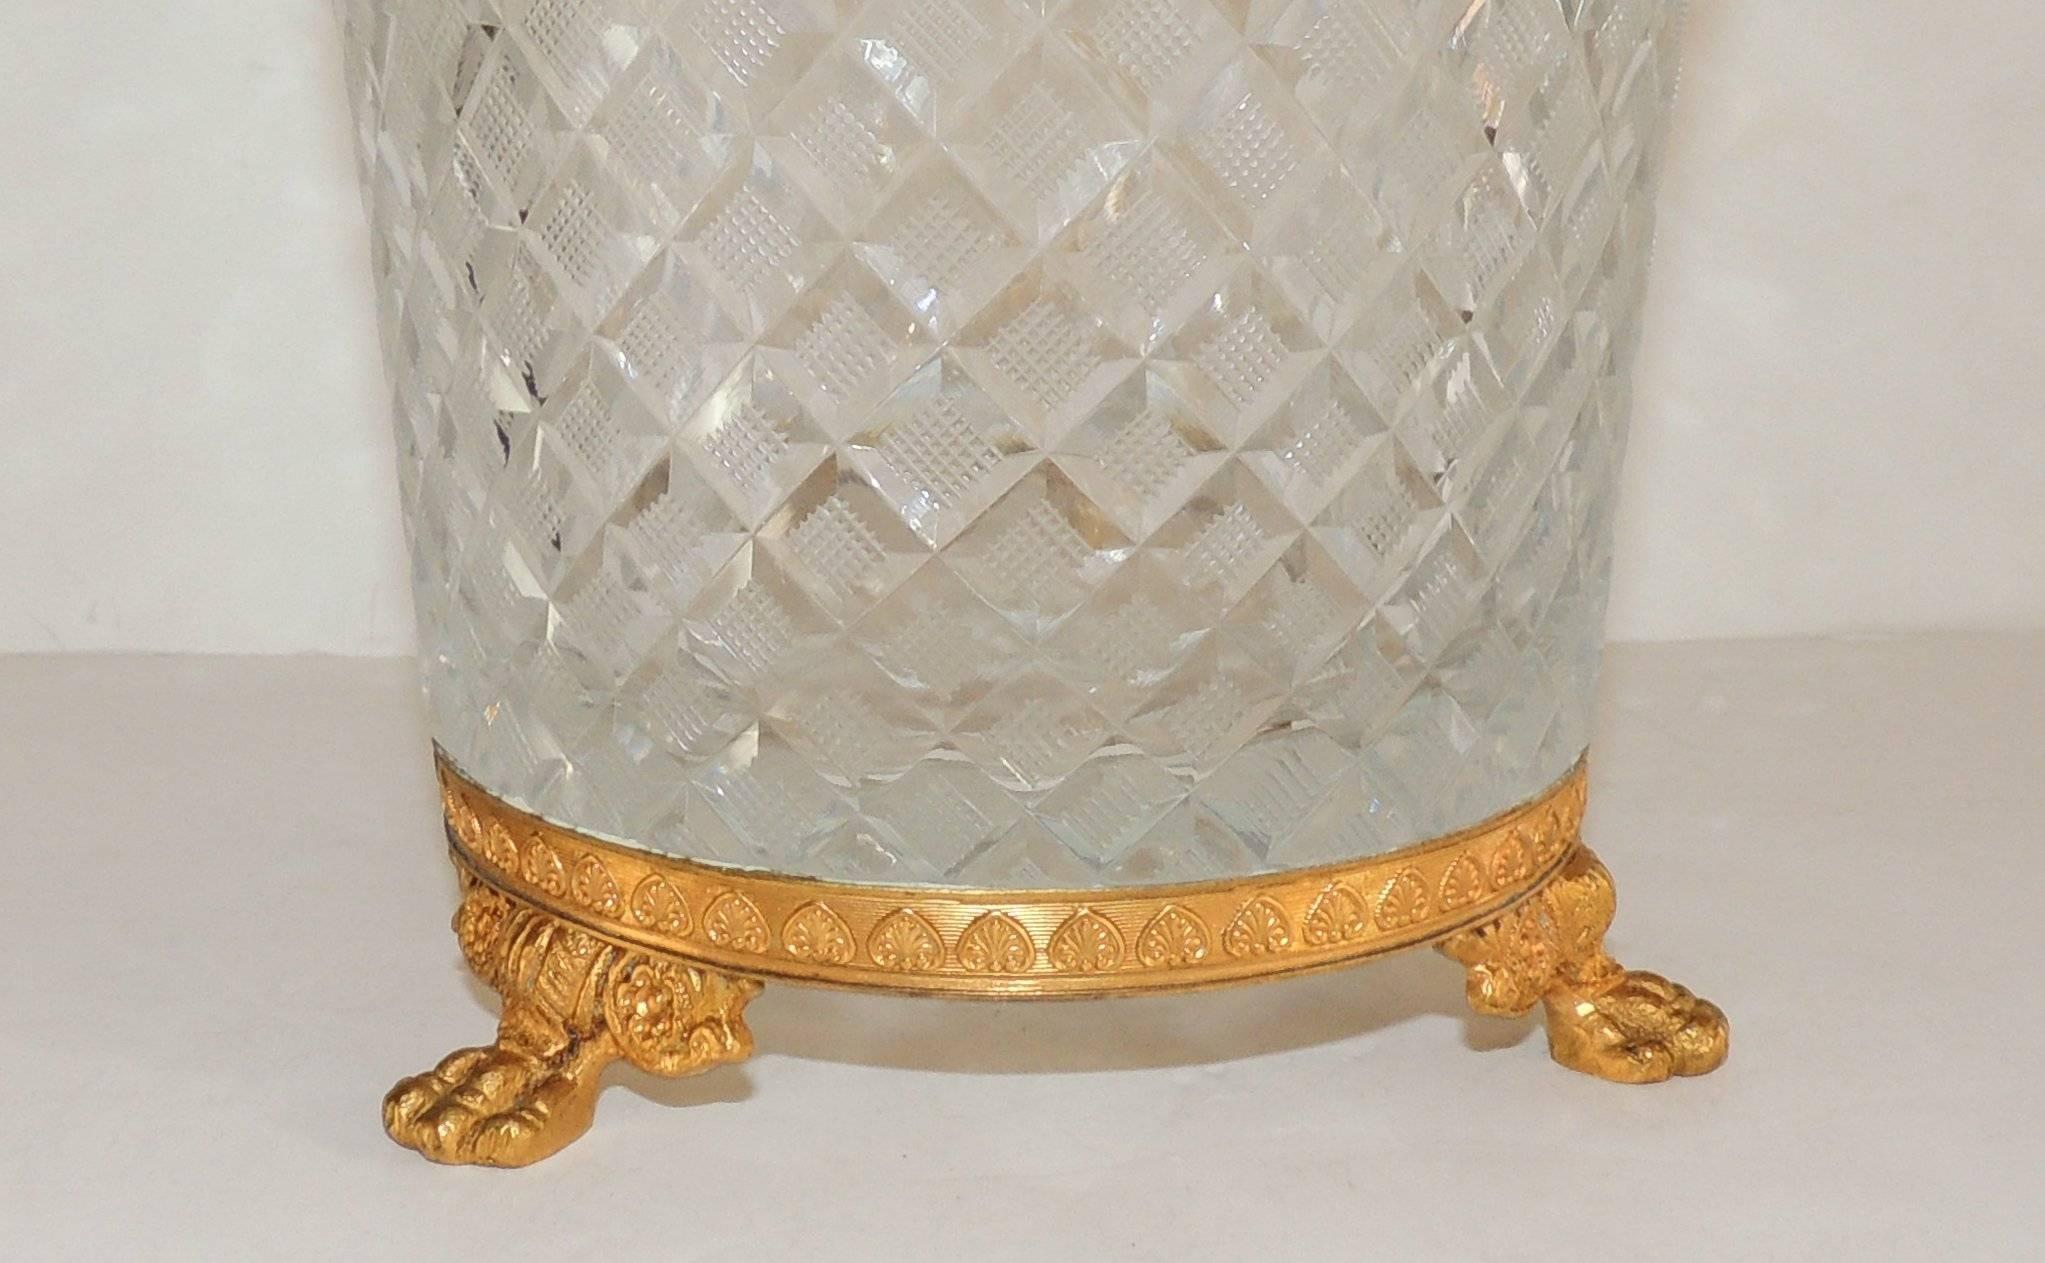 Regency Wonderful French Baccarat Doré Bronze Ormolu Diamond Cut Crystal Ice Bucket Vase